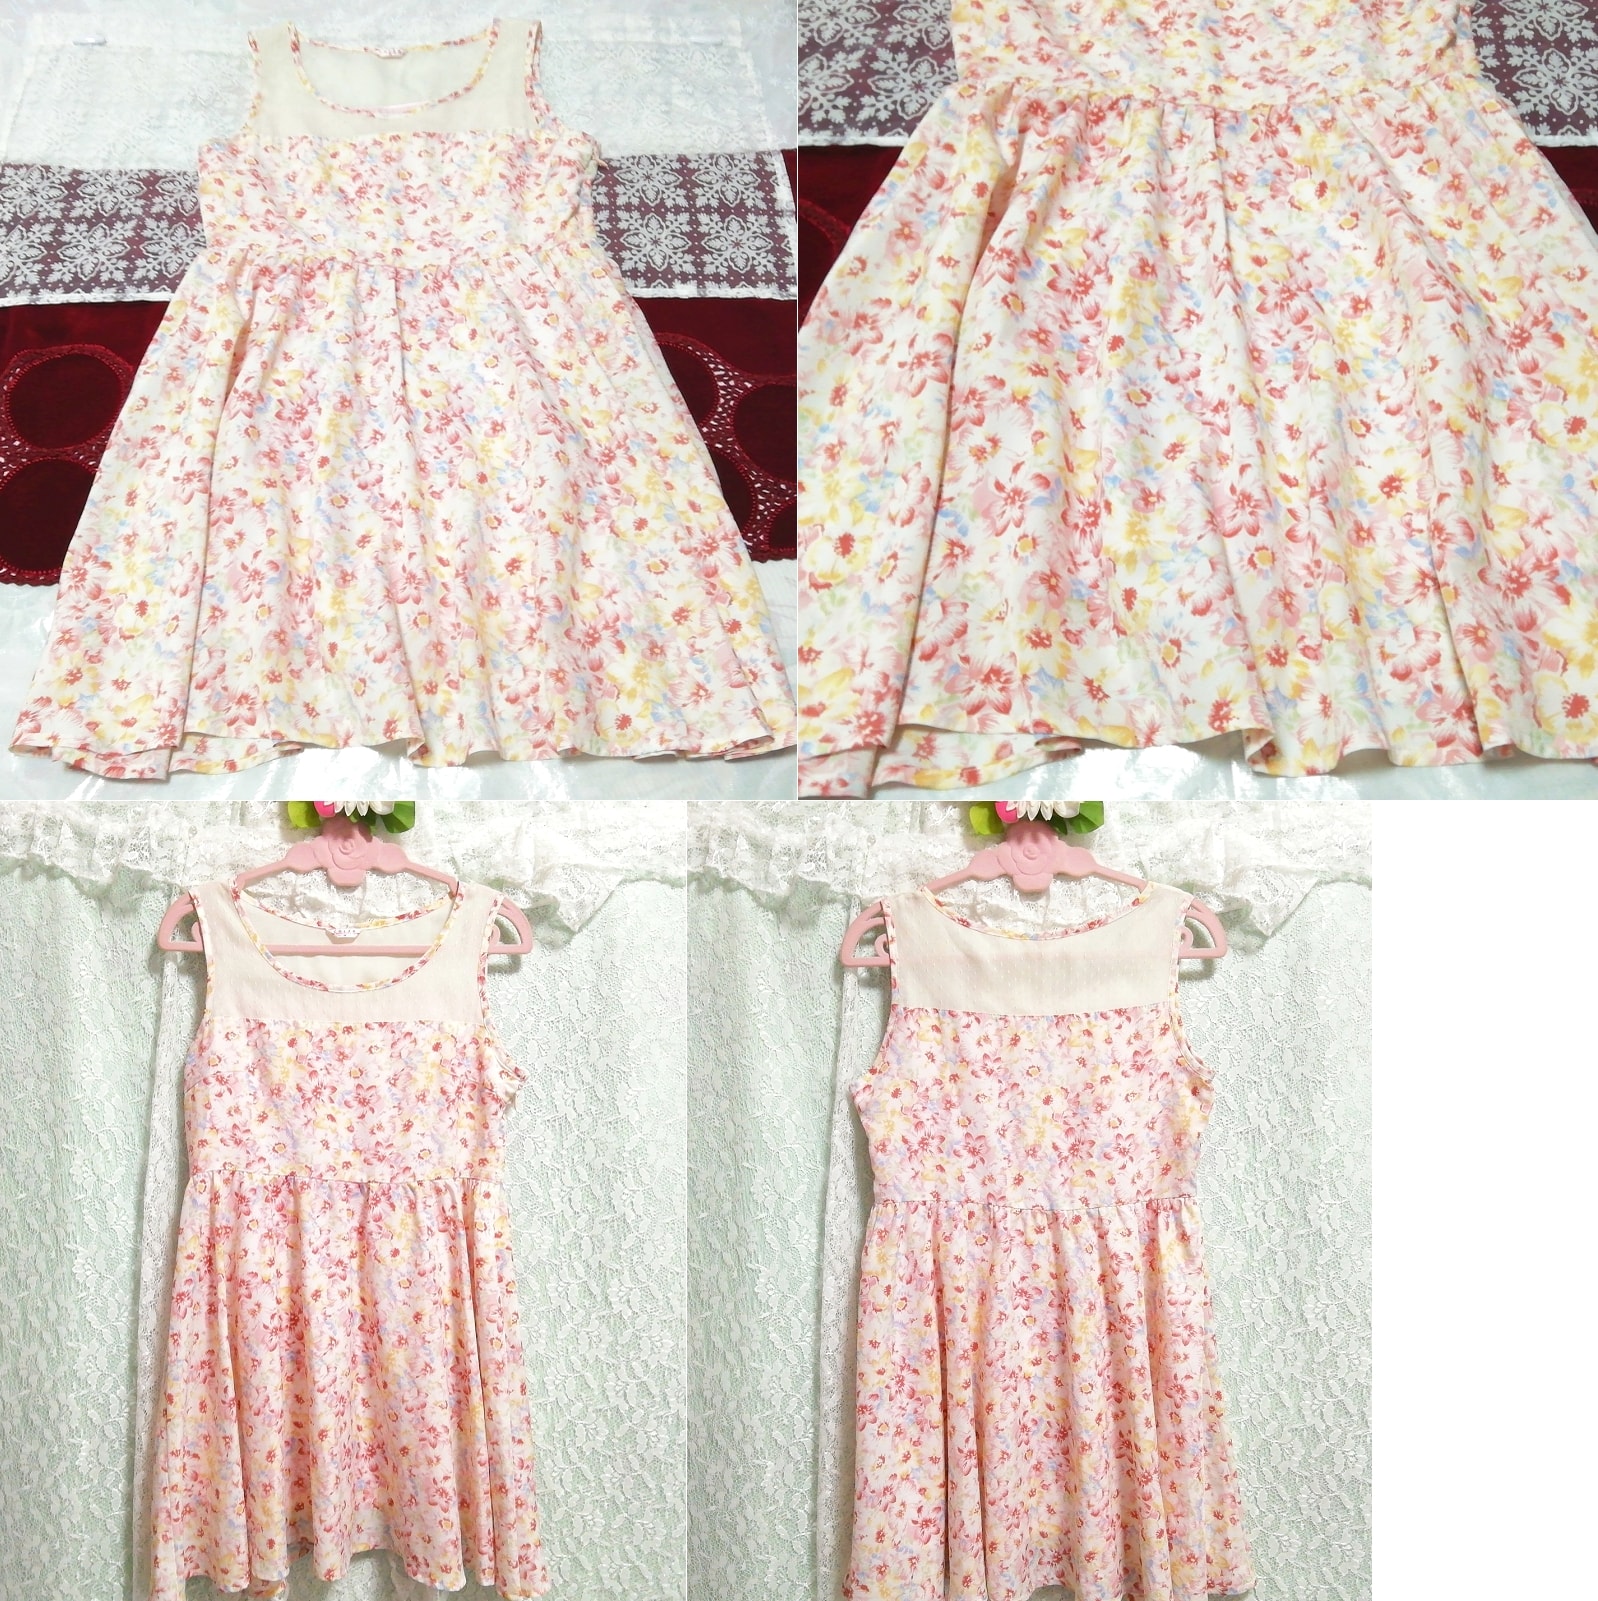 Minivestido camisón negligee sin mangas de gasa con estampado floral amarillo azul claro rosa, mini falda, talla m